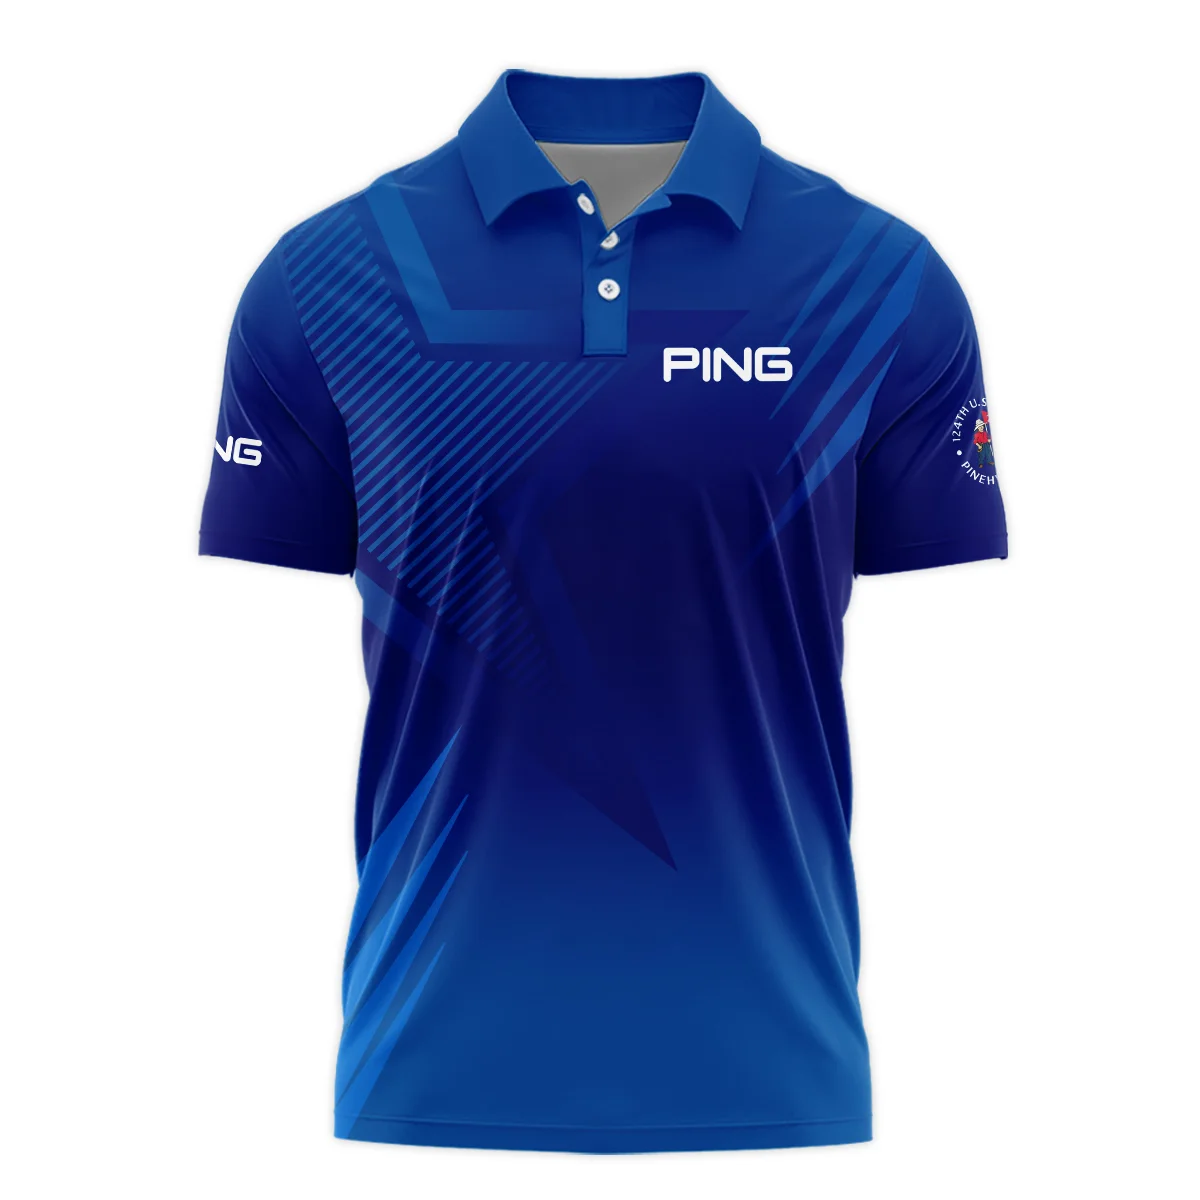 124th U.S. Open Pinehurst No.2 Ping Polo Shirt Dark Blue Gradient Star Pattern Polo Shirt For Men